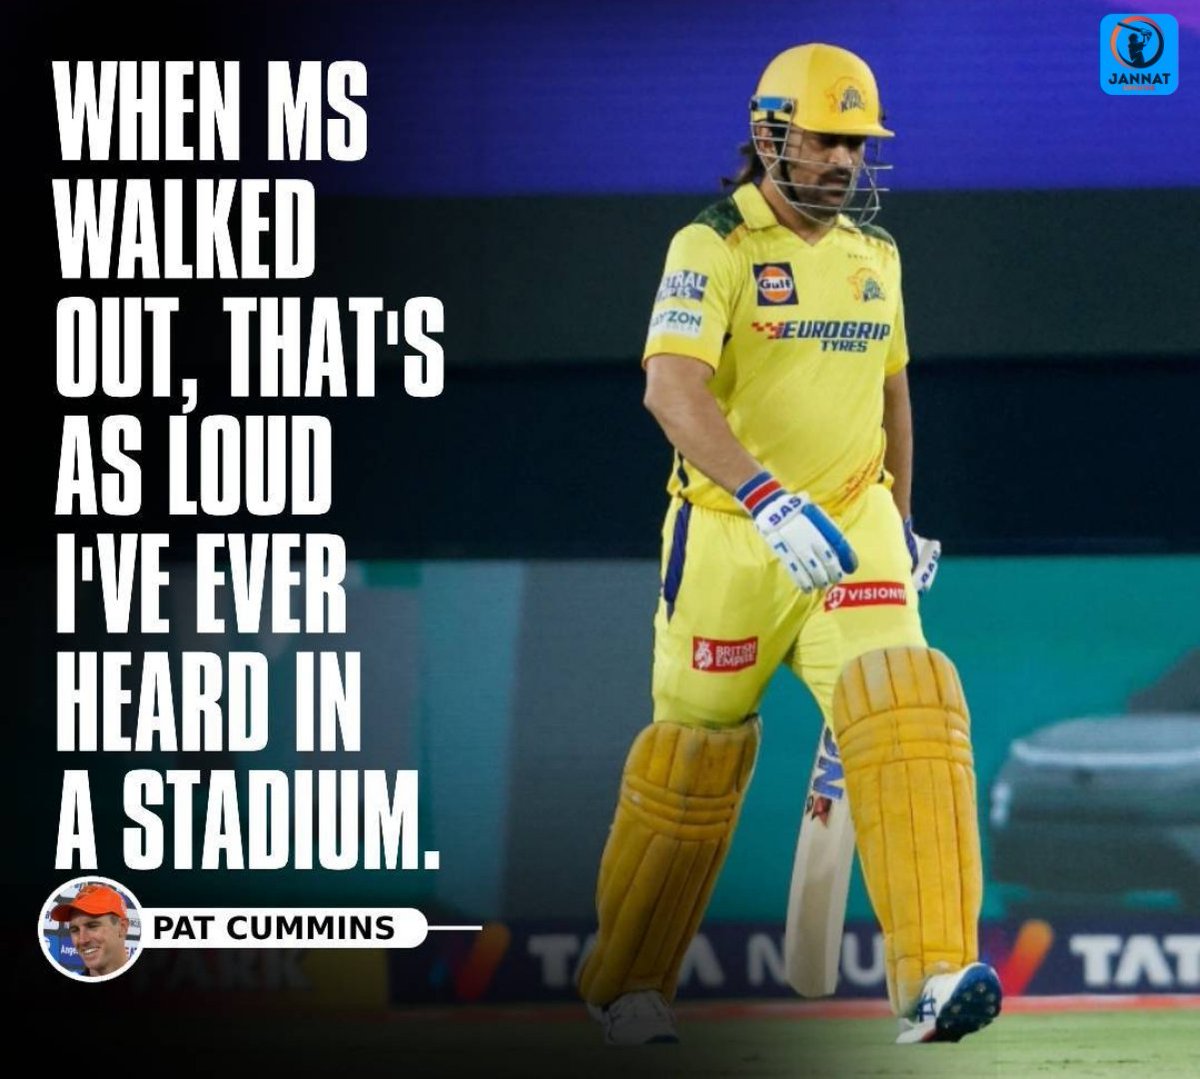 Pat Cummins shares his thoughts on the crowd's response as MS Dhoni walked out to bat.
.
.
.
.
#jannatupdates #MSDhoni #PatCummins #SRHvsCSK #SRHVCSK #IPL #IPL2024 #Cricket #RRvsRCB #CricketTwitter #CricitPredicta #cricketfans #CricketFever #cricketnews #CricketLive